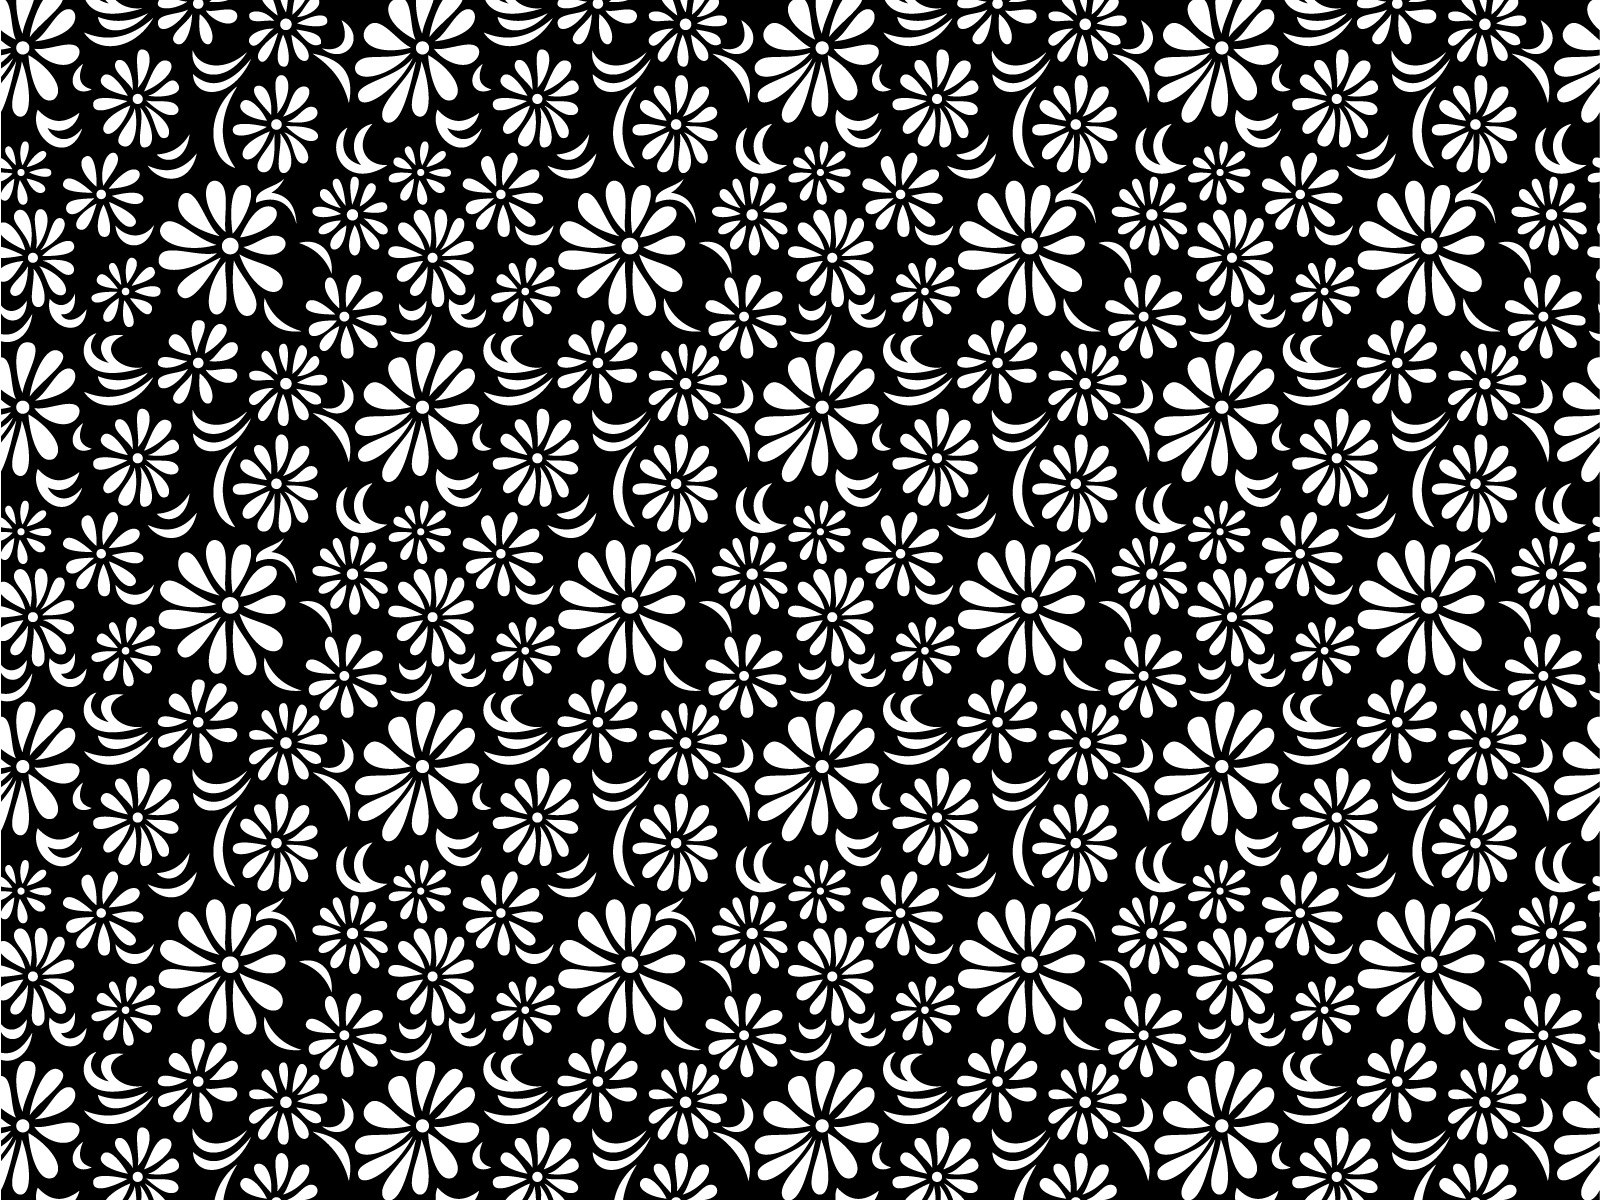 black and white floral wallpaper,pattern,design,pattern,symmetry,monochrome